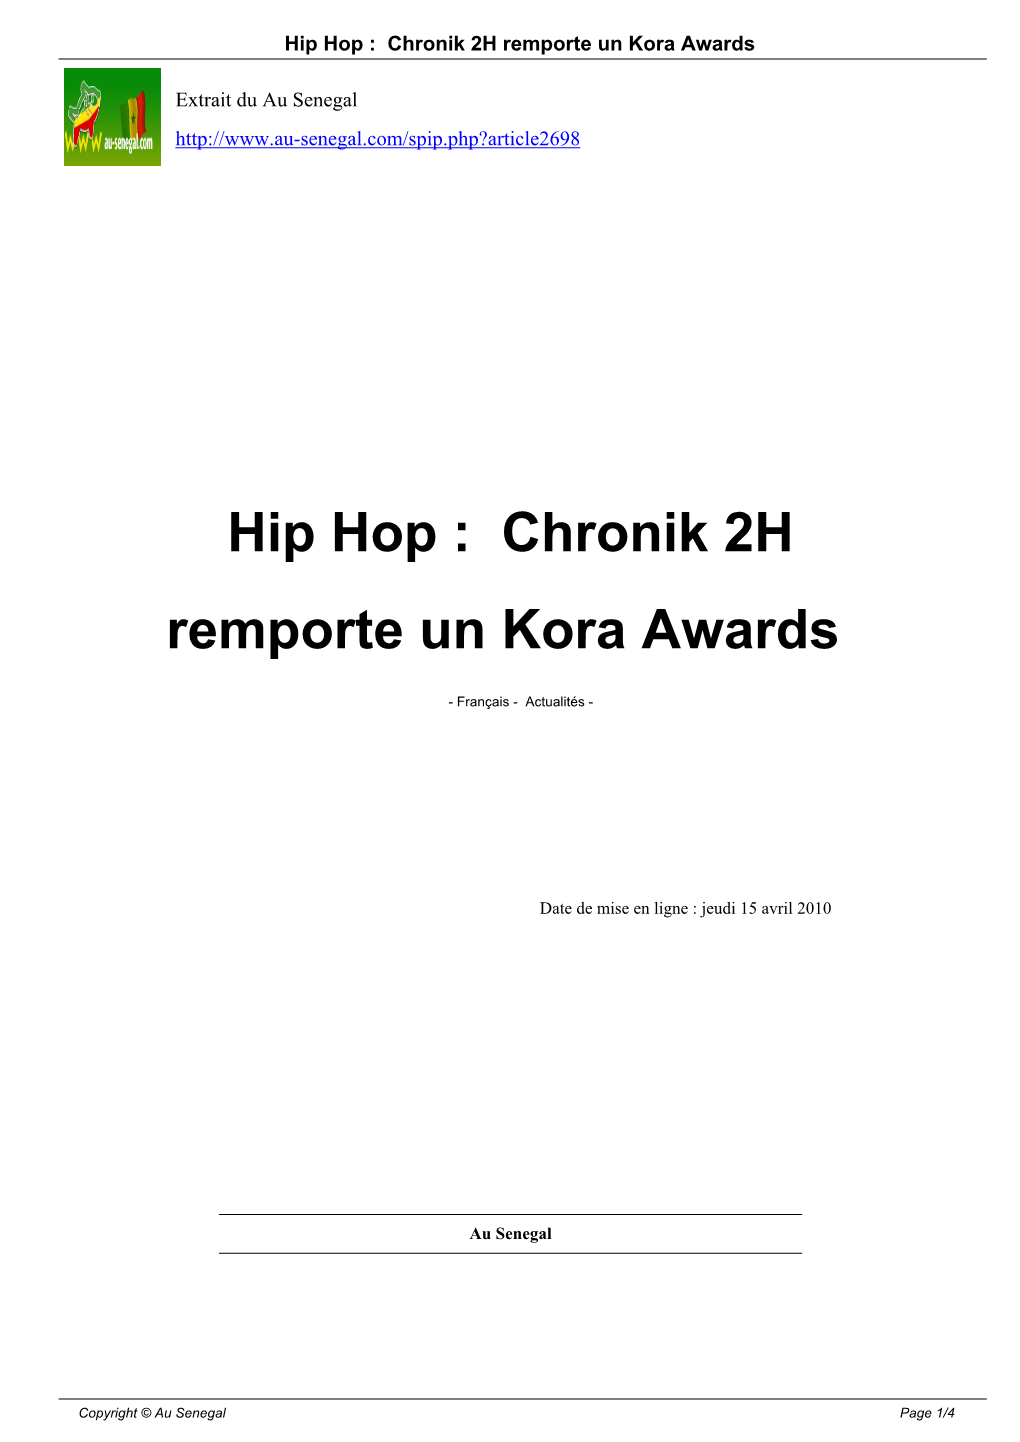 Hip Hop : Chronik 2H Remporte Un Kora Awards